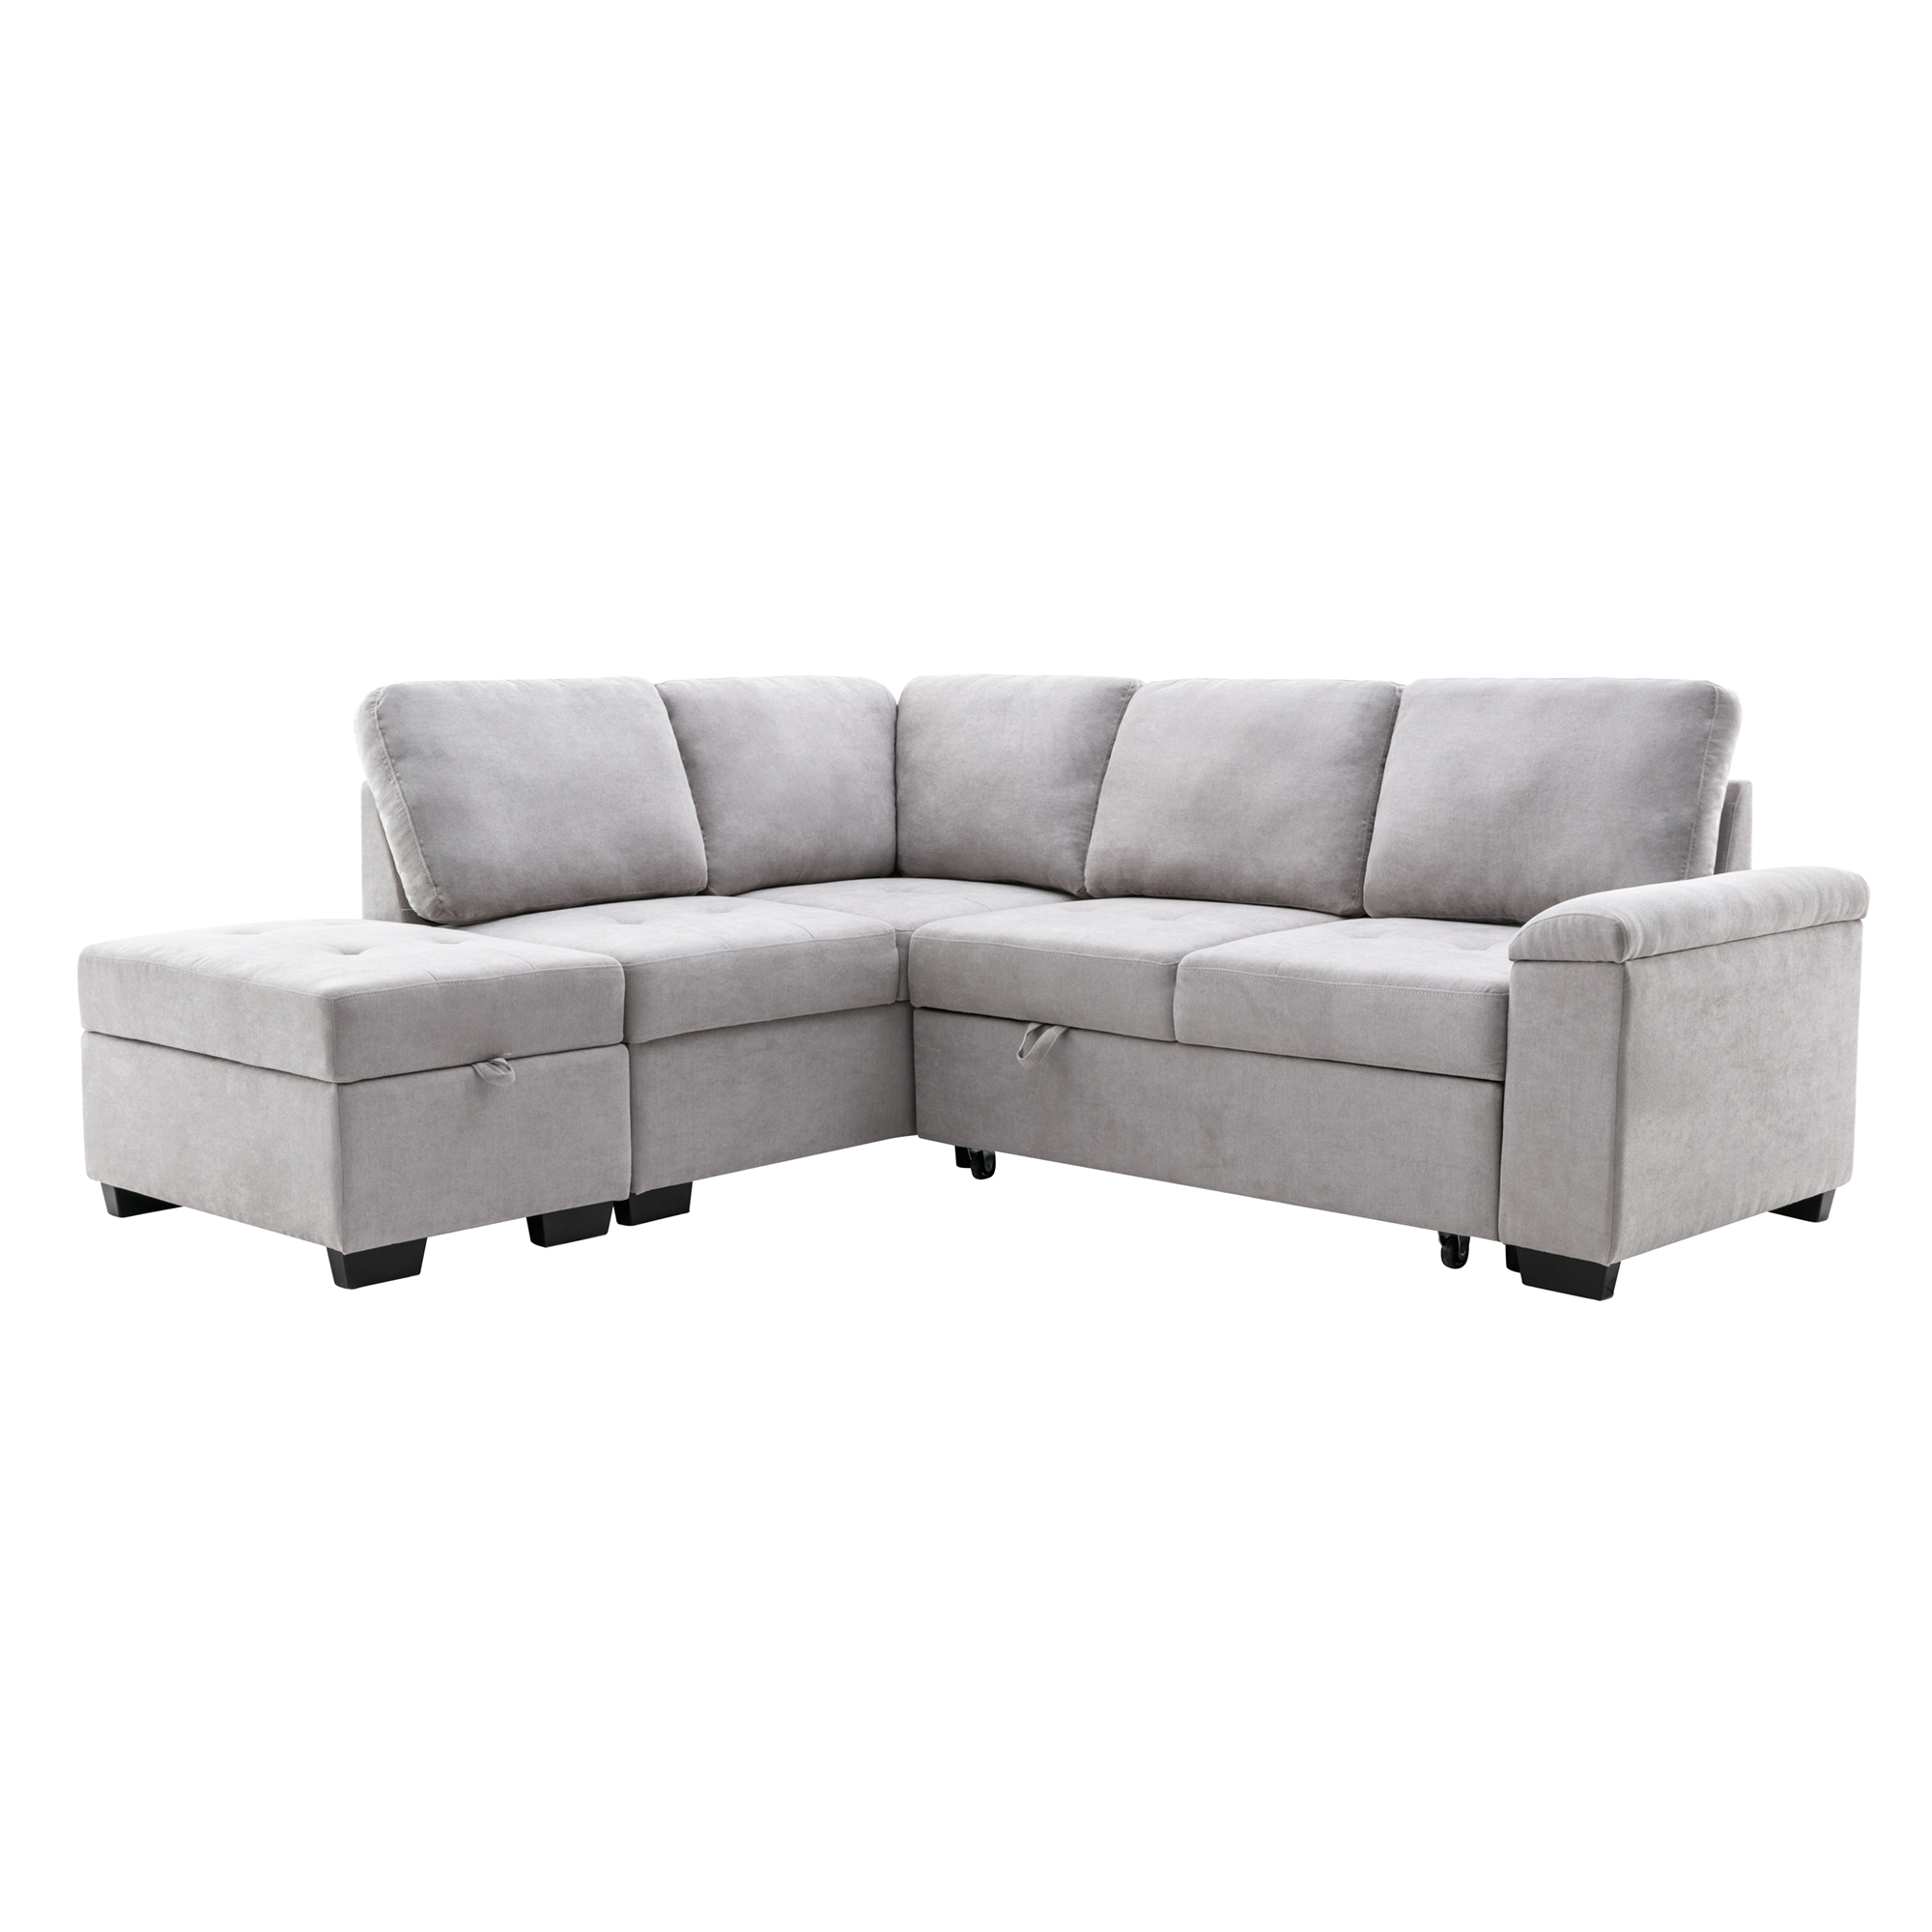 86" Sleeper Sectional Sofa with Ottoman, Gray - SG000250AAA